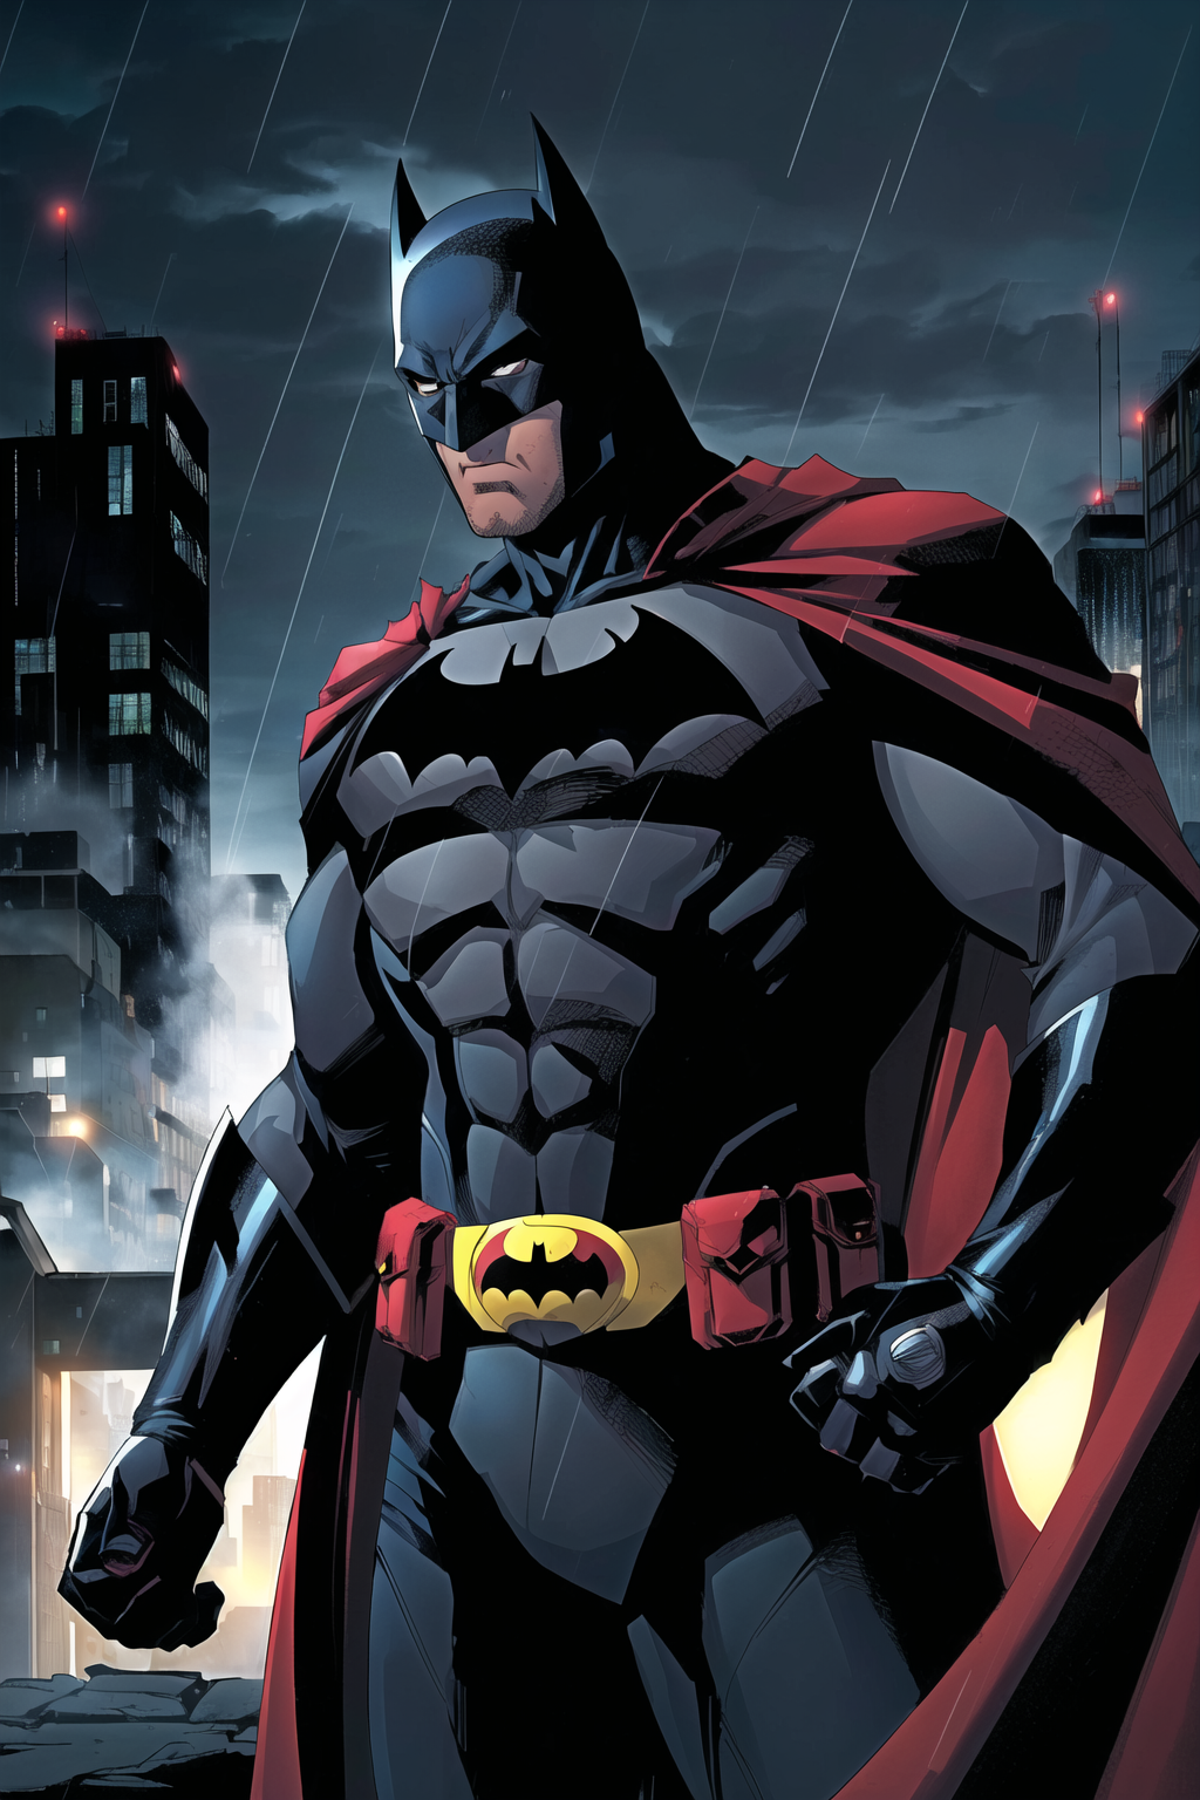 A Batman cartoon image with a red cape.